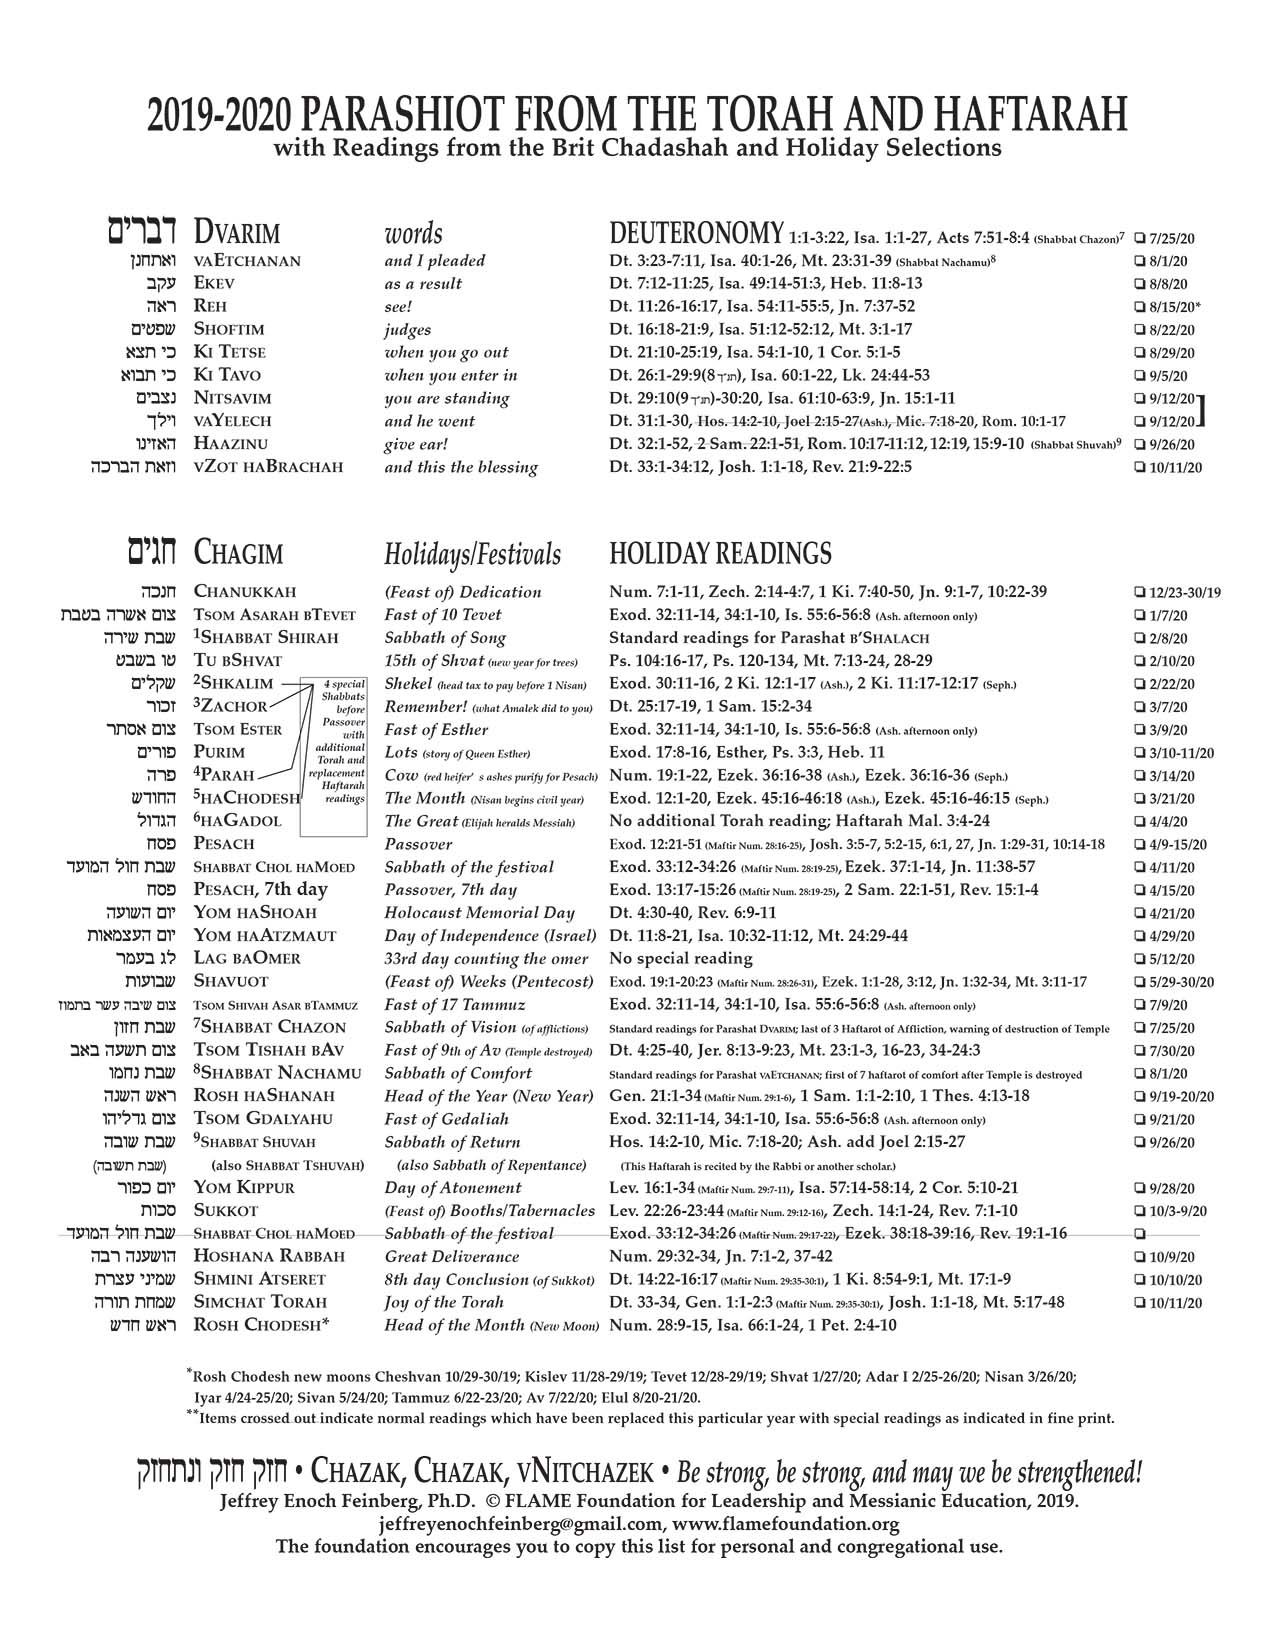 Torah Reading Schedule - Parashot - Tzur Yisrael / Rock Of throughout Torah Reading Schedule 2019 2020